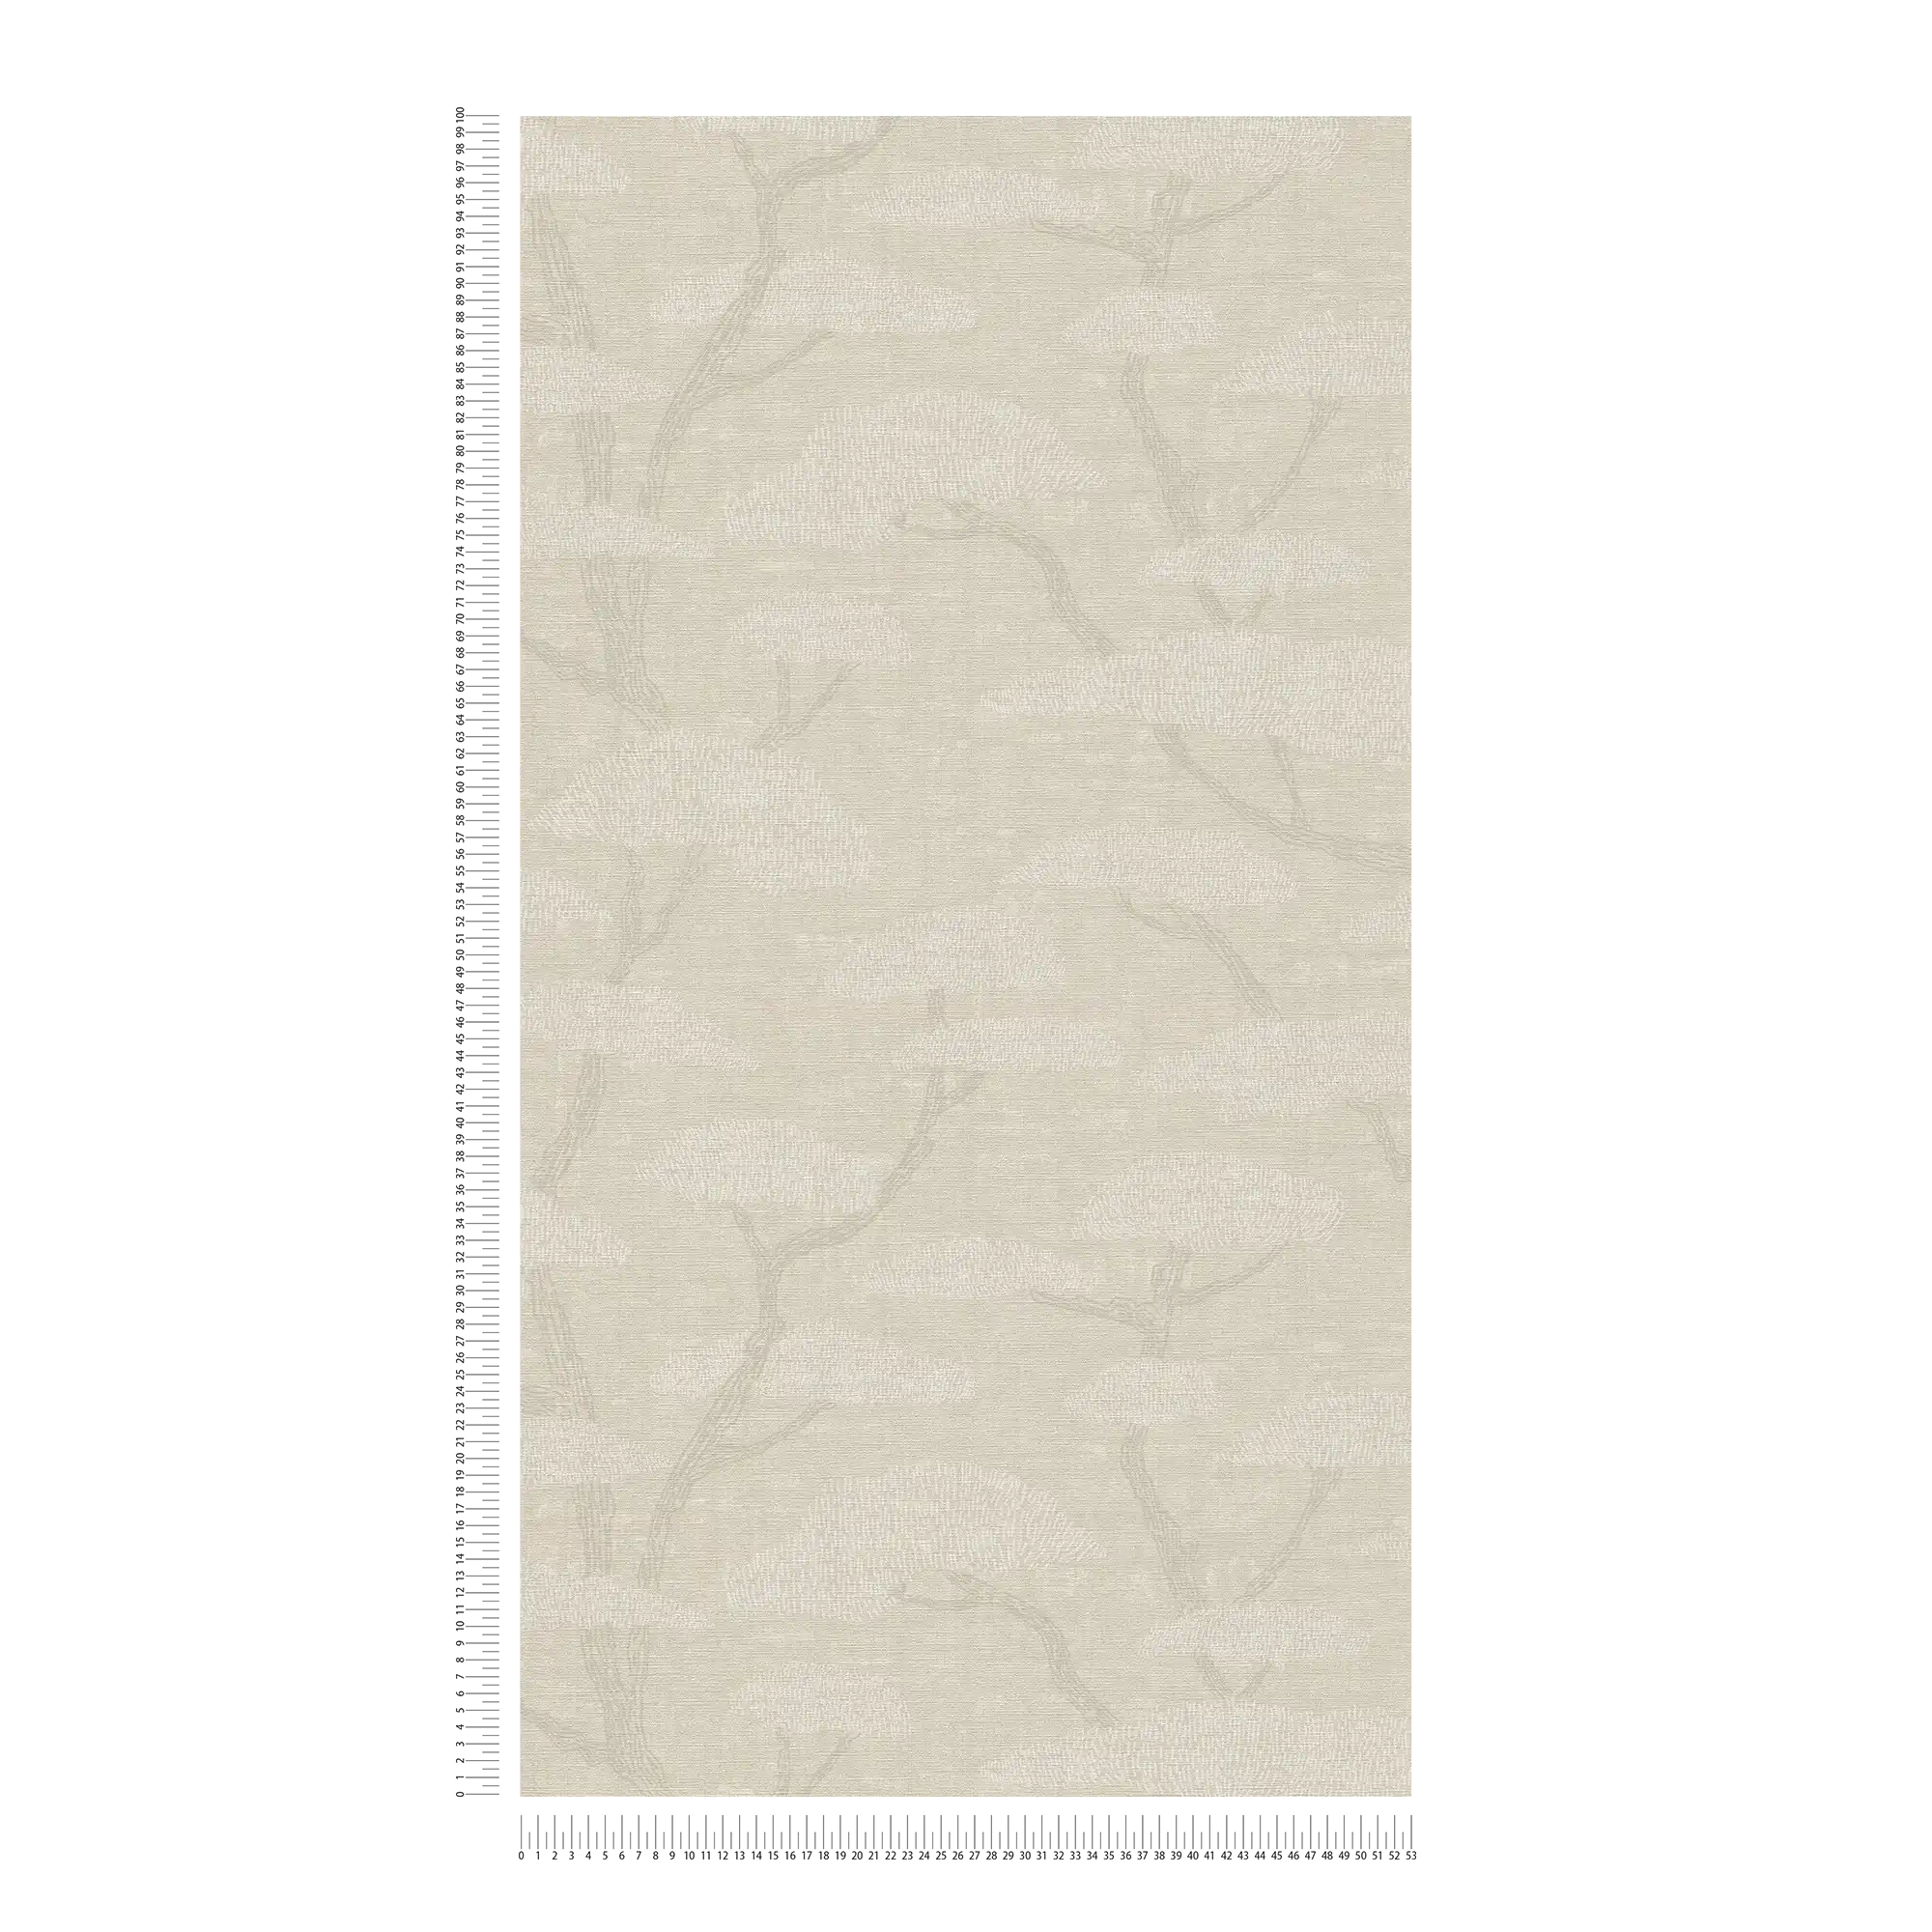             Carta da parati in tessuto non tessuto pineta in stile retrò - beige
        